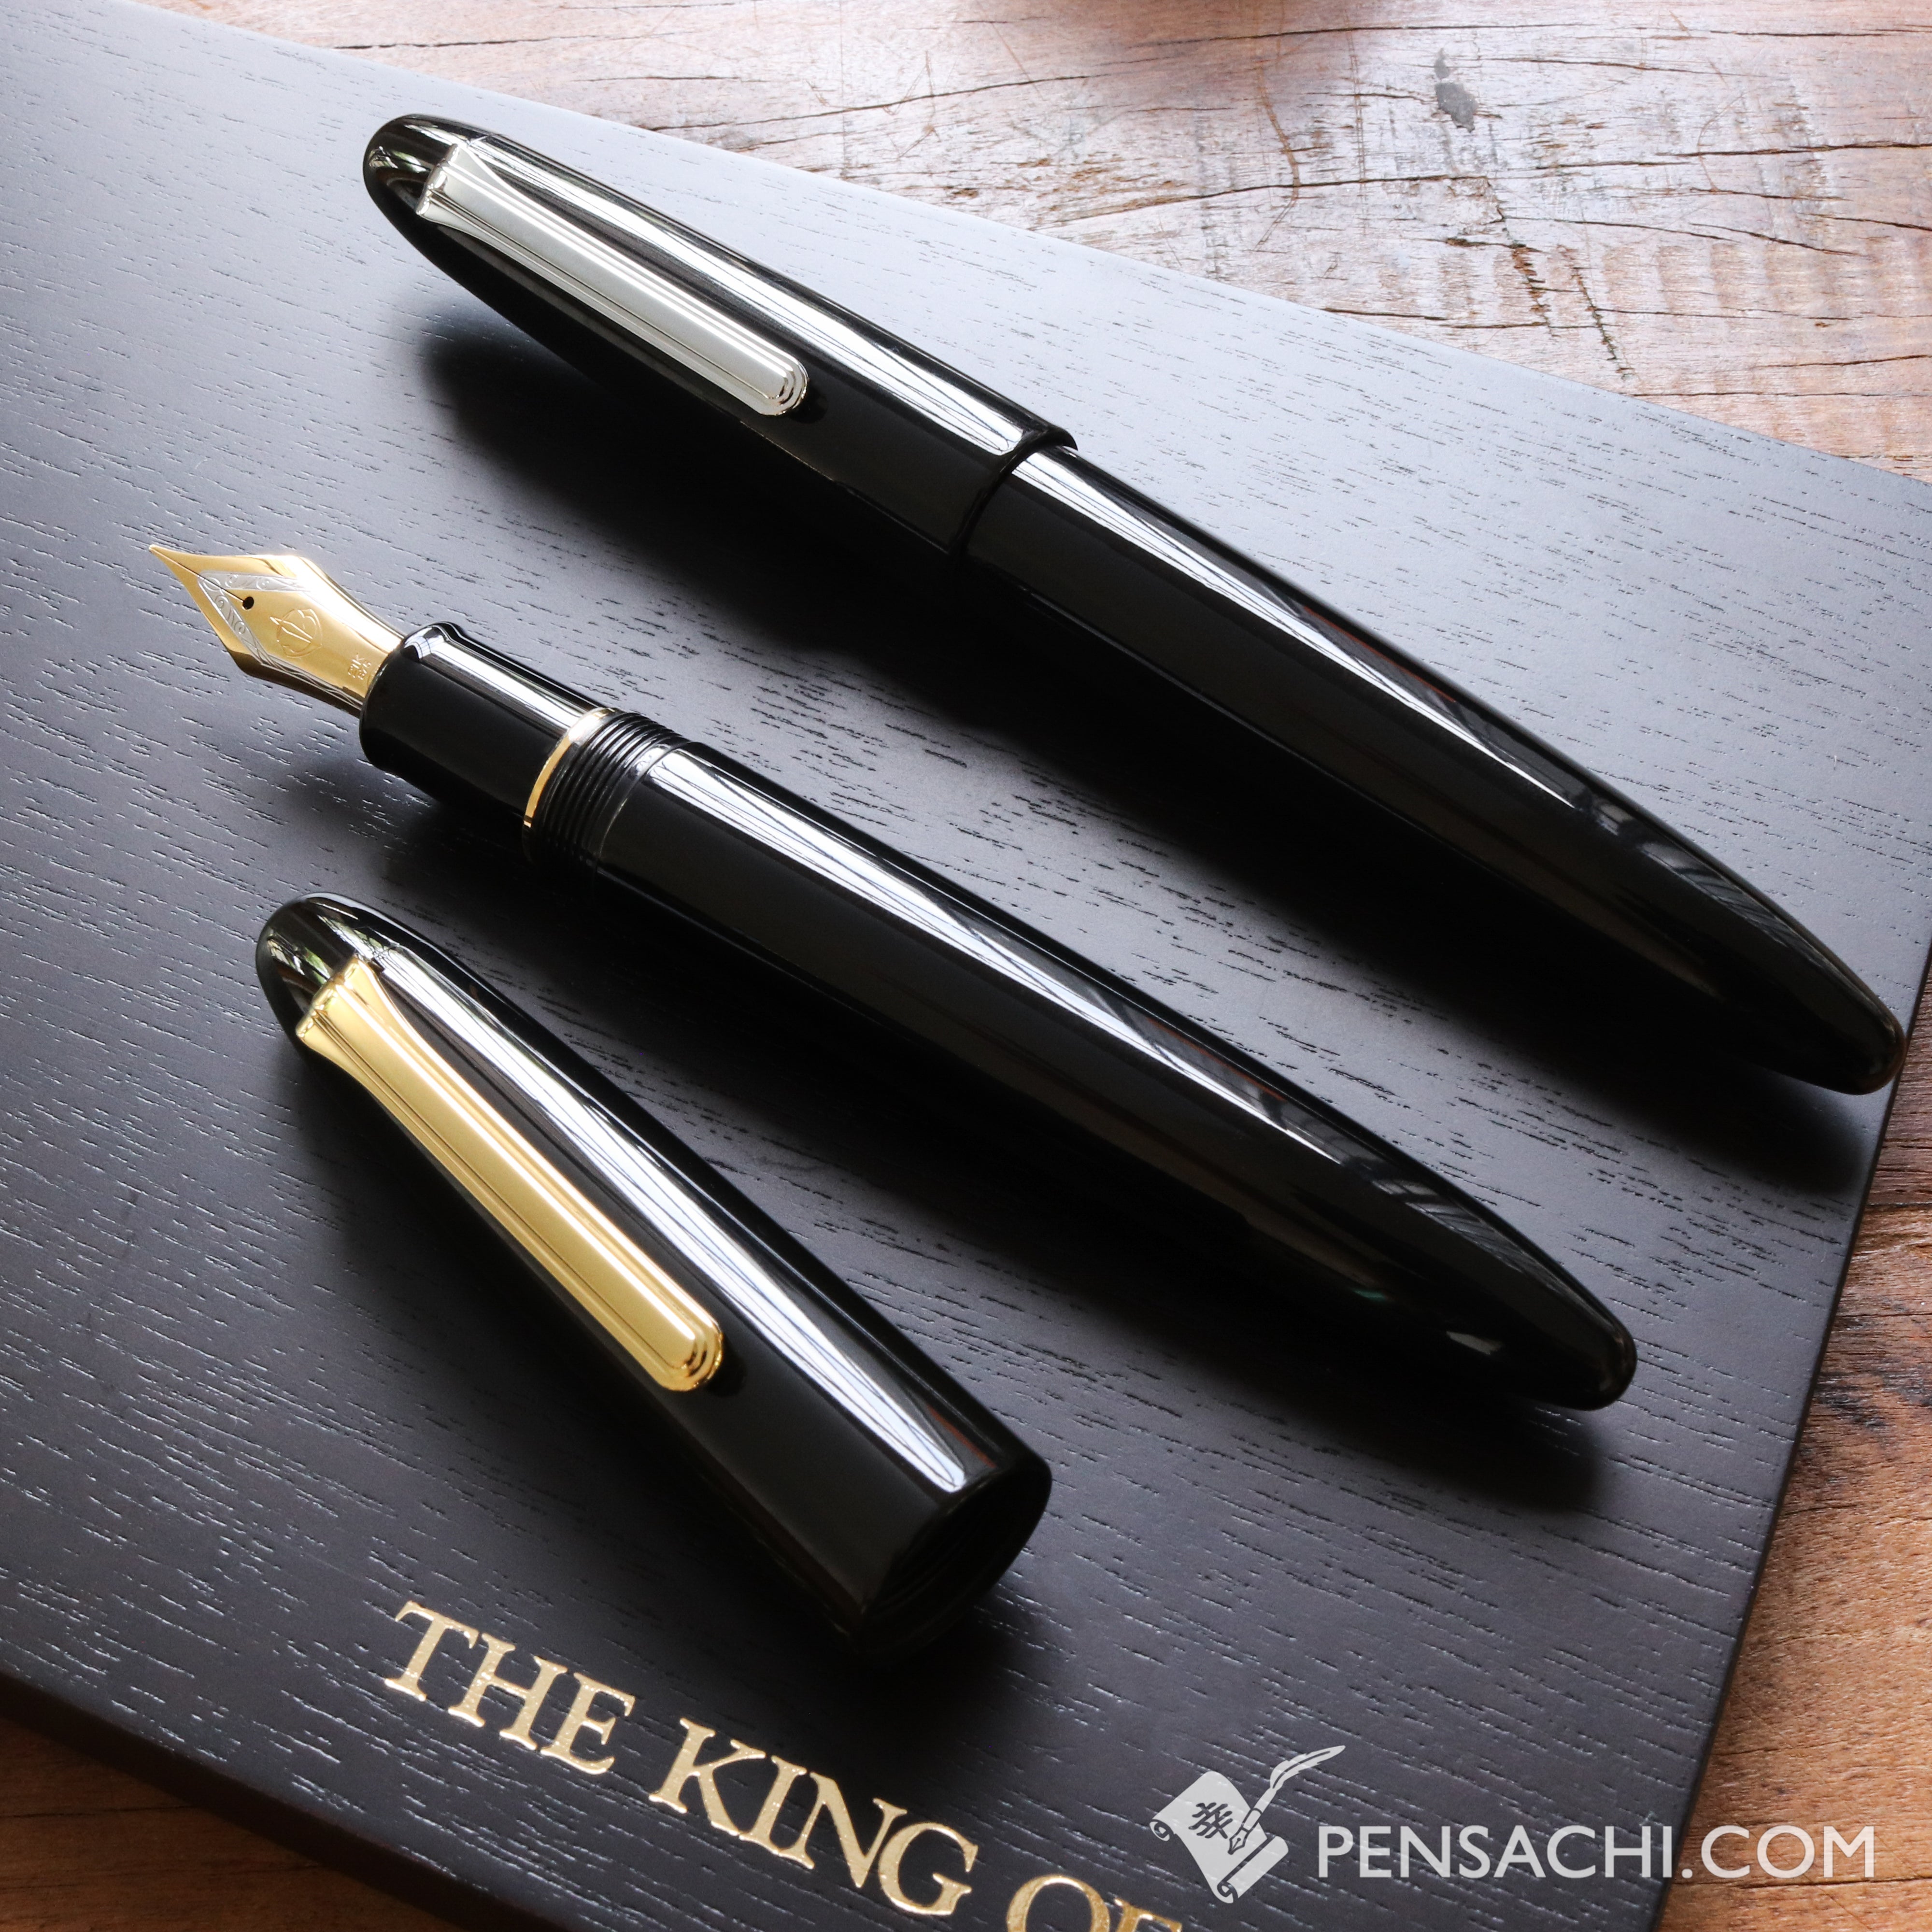 SAILOR King of Pens 1911 Ebonite Fountain Pen - Black Gold - PenSachi Japanese Limited Fountain Pen